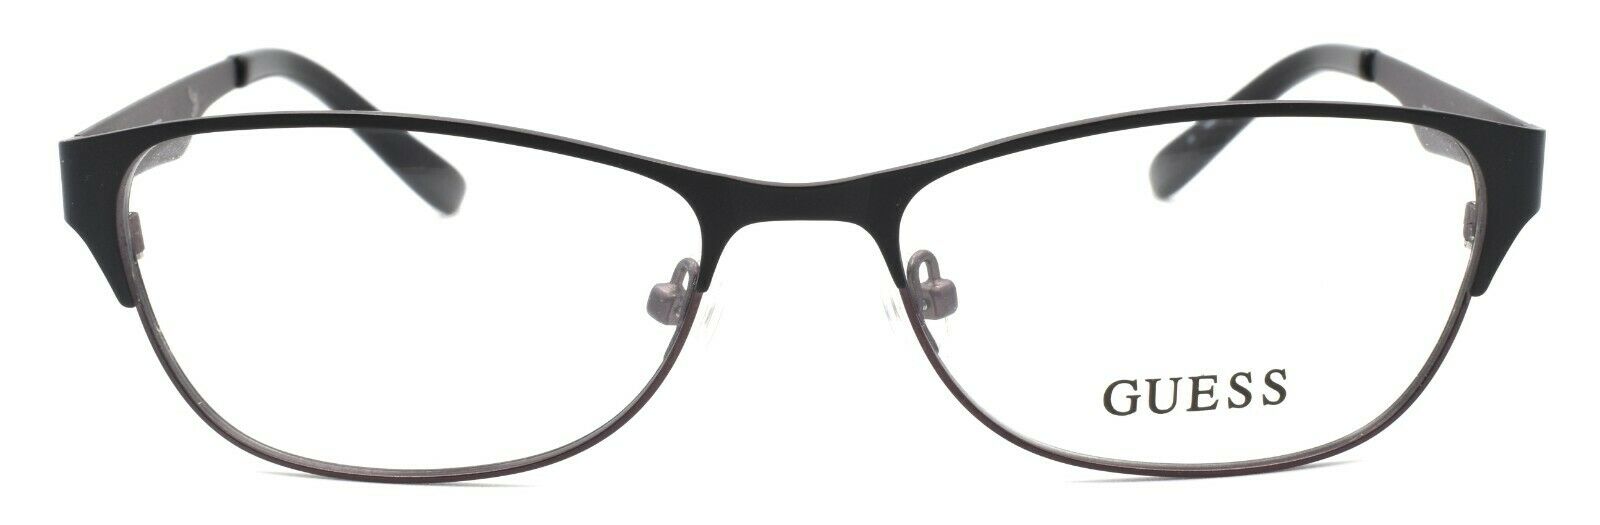 2-GUESS GU2398 BKGUN Women's Eyeglasses Frames 55-16-140 Black / Brown + CASE-715583997394-IKSpecs